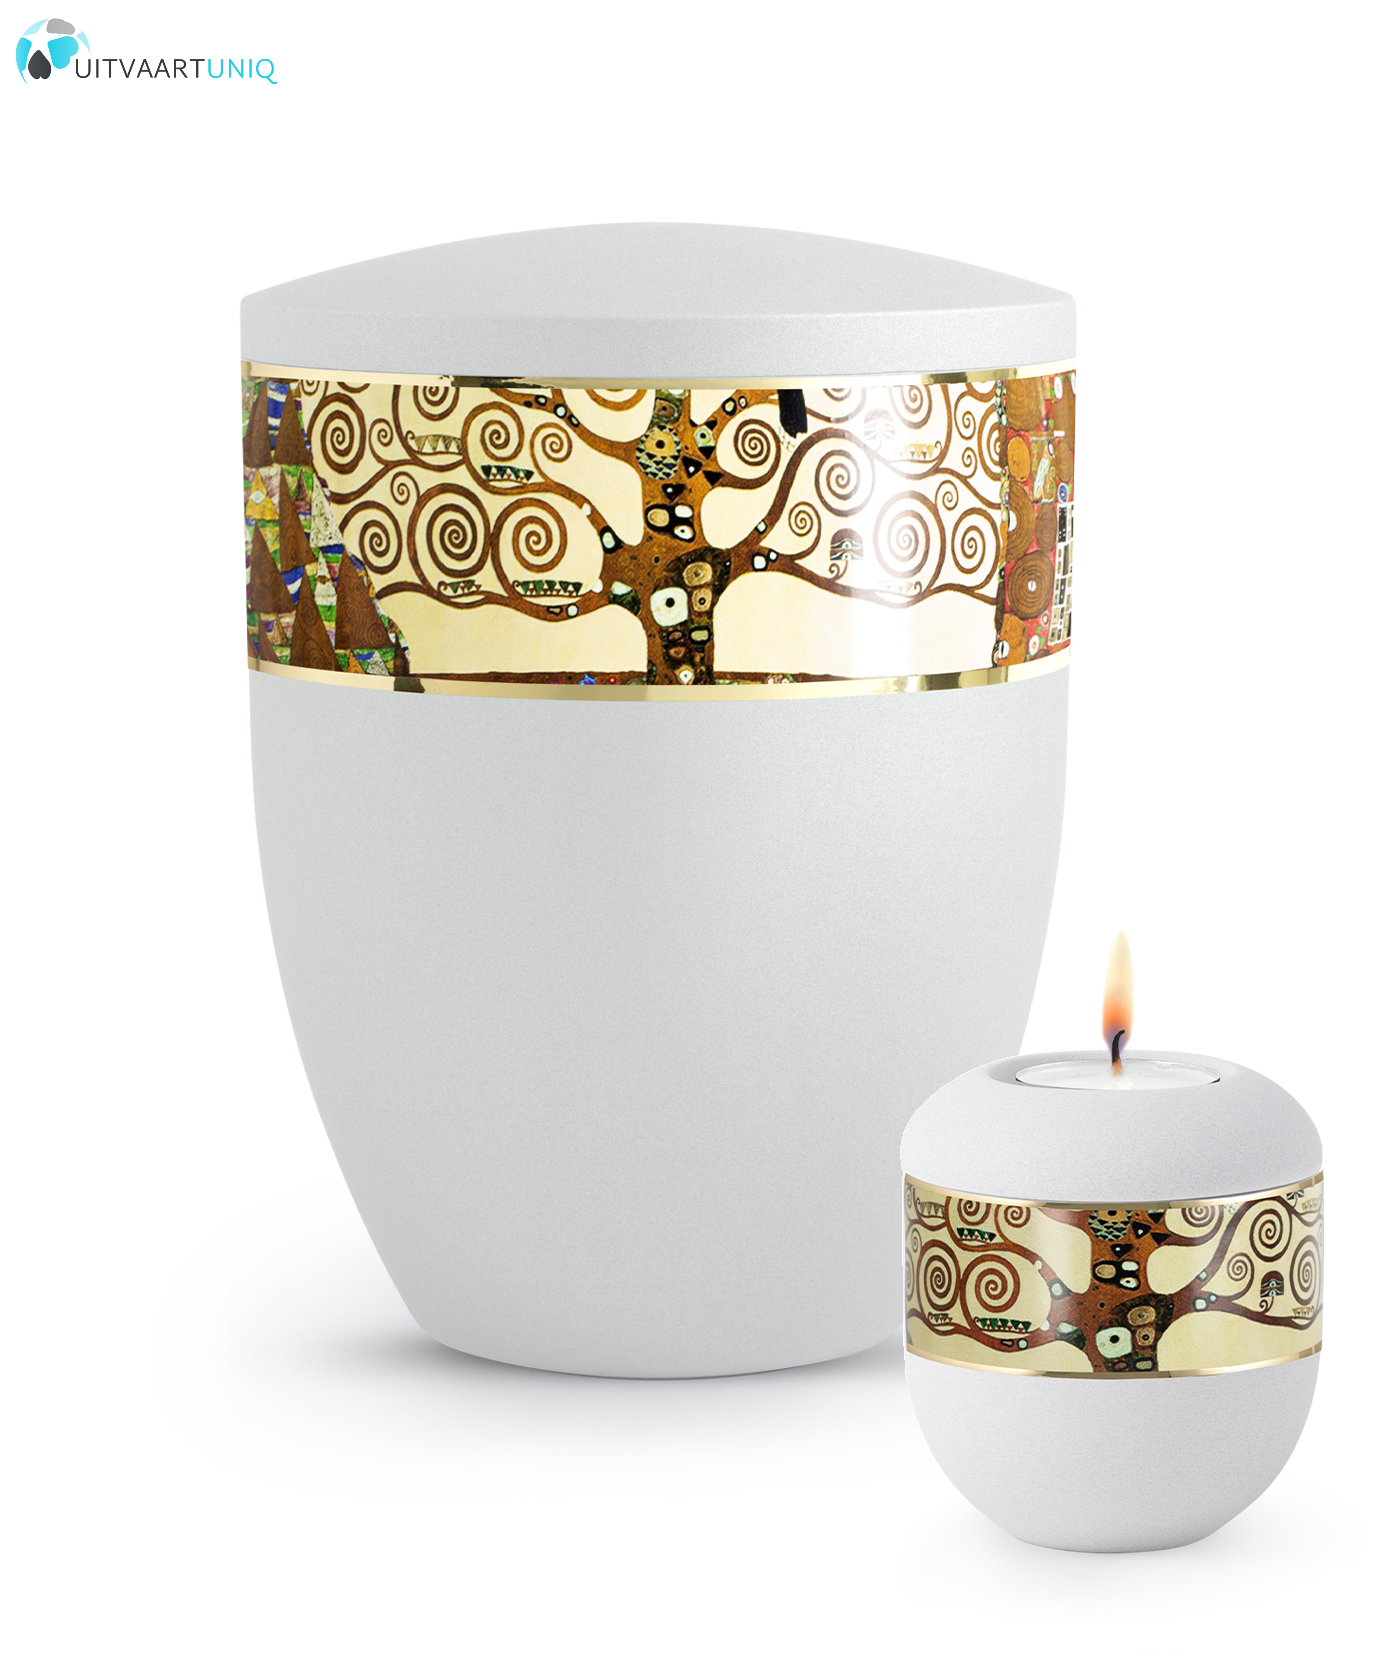  Mini urn modern levensboom wit - met lichtje